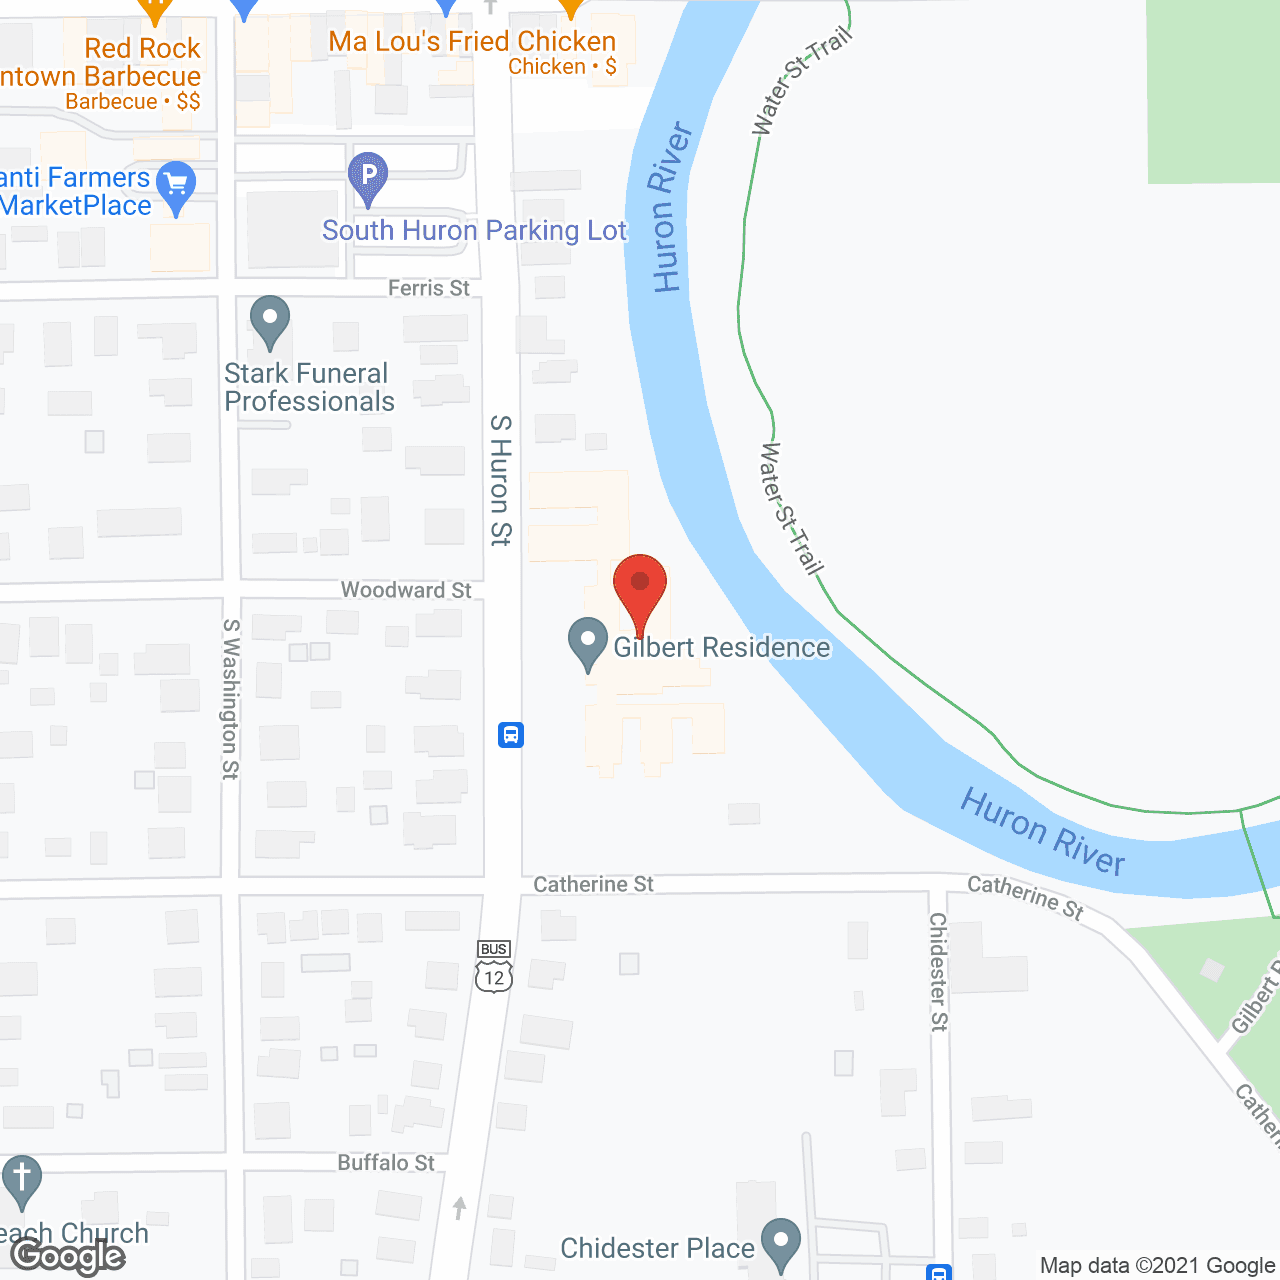 The Gilbert Residence in google map